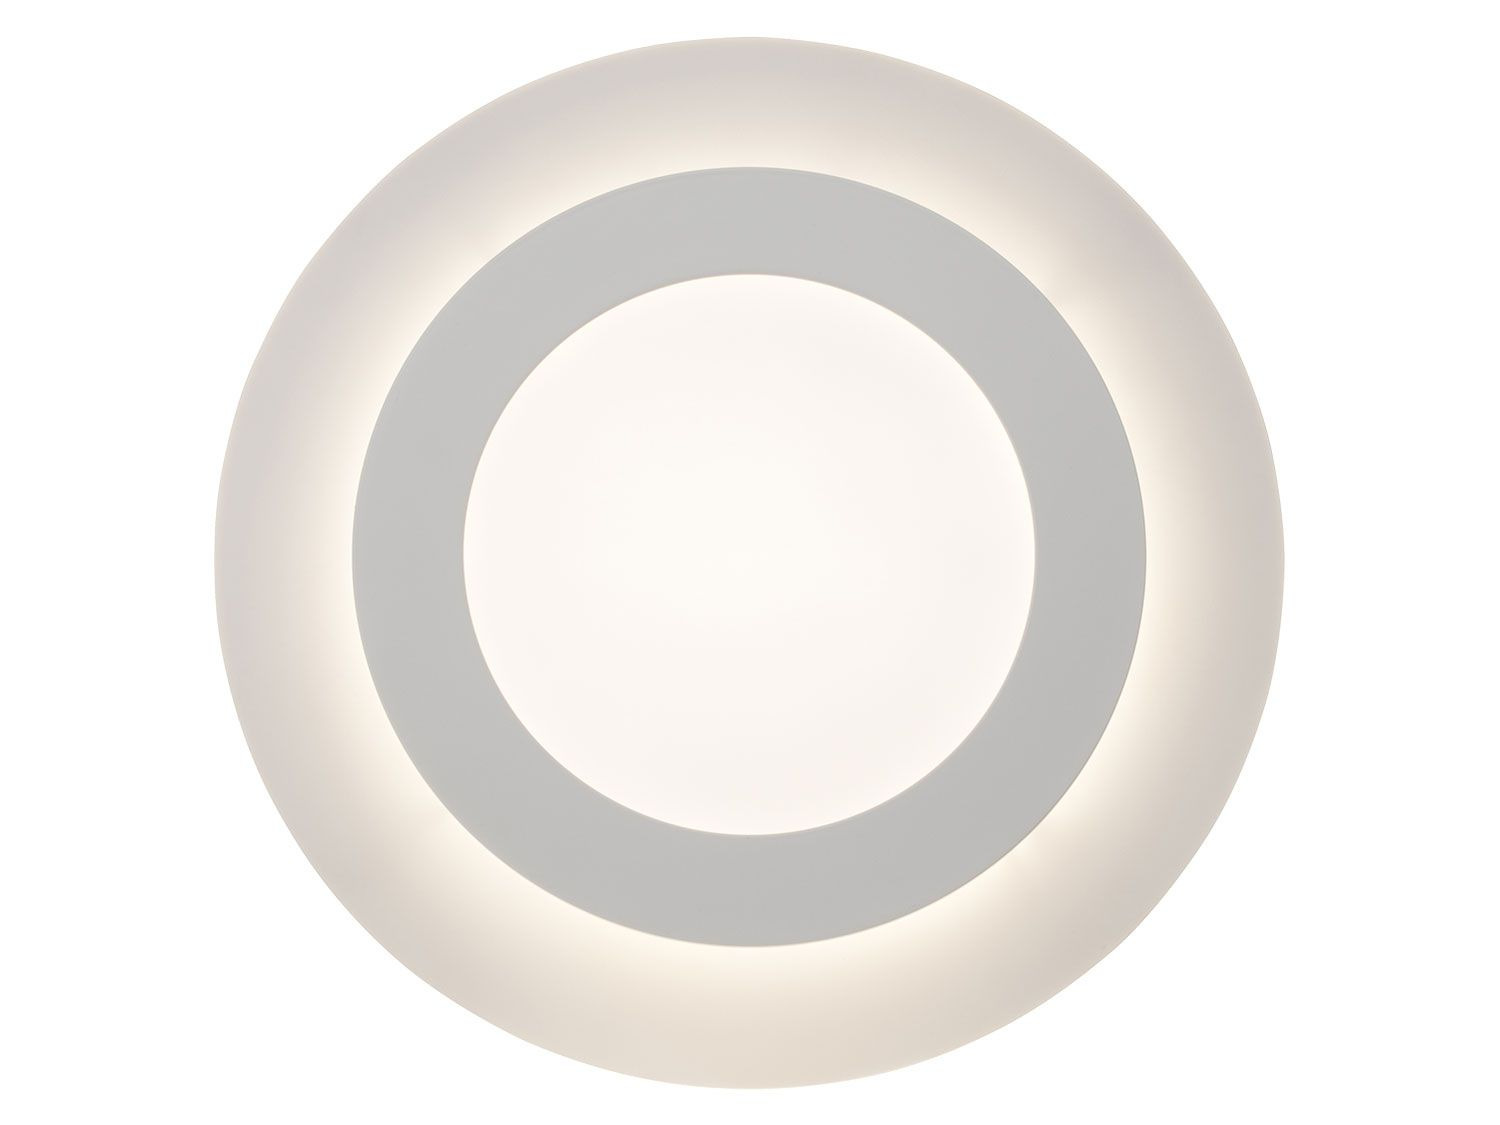 AEG LED Deckenleuchte »Karia« 35 cm, weiß | LIDL